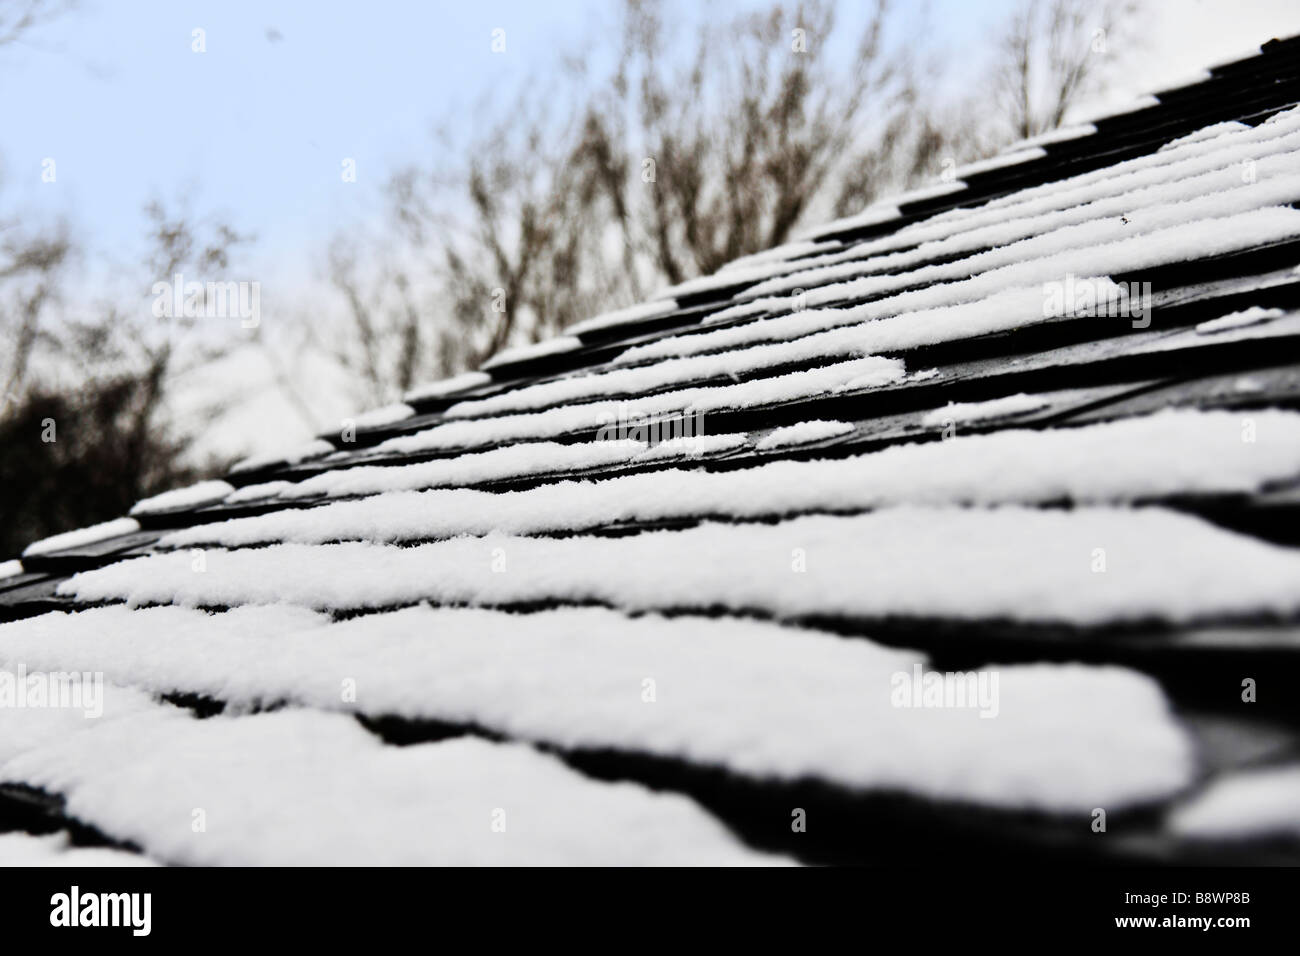 slates on roof of house Stock Photo